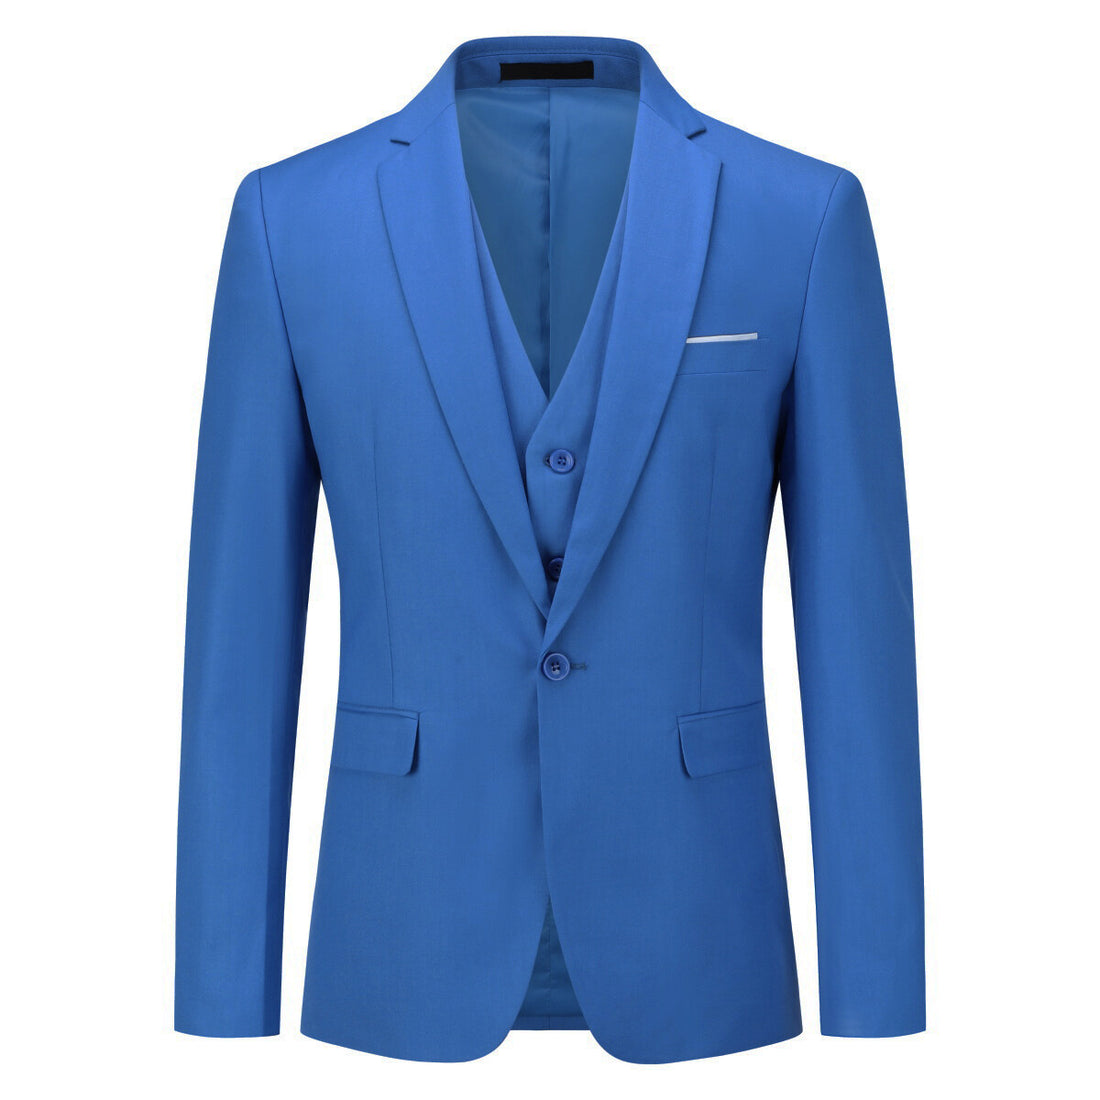 Regatta Blue 3-Piece Slim Fit Classic Suit